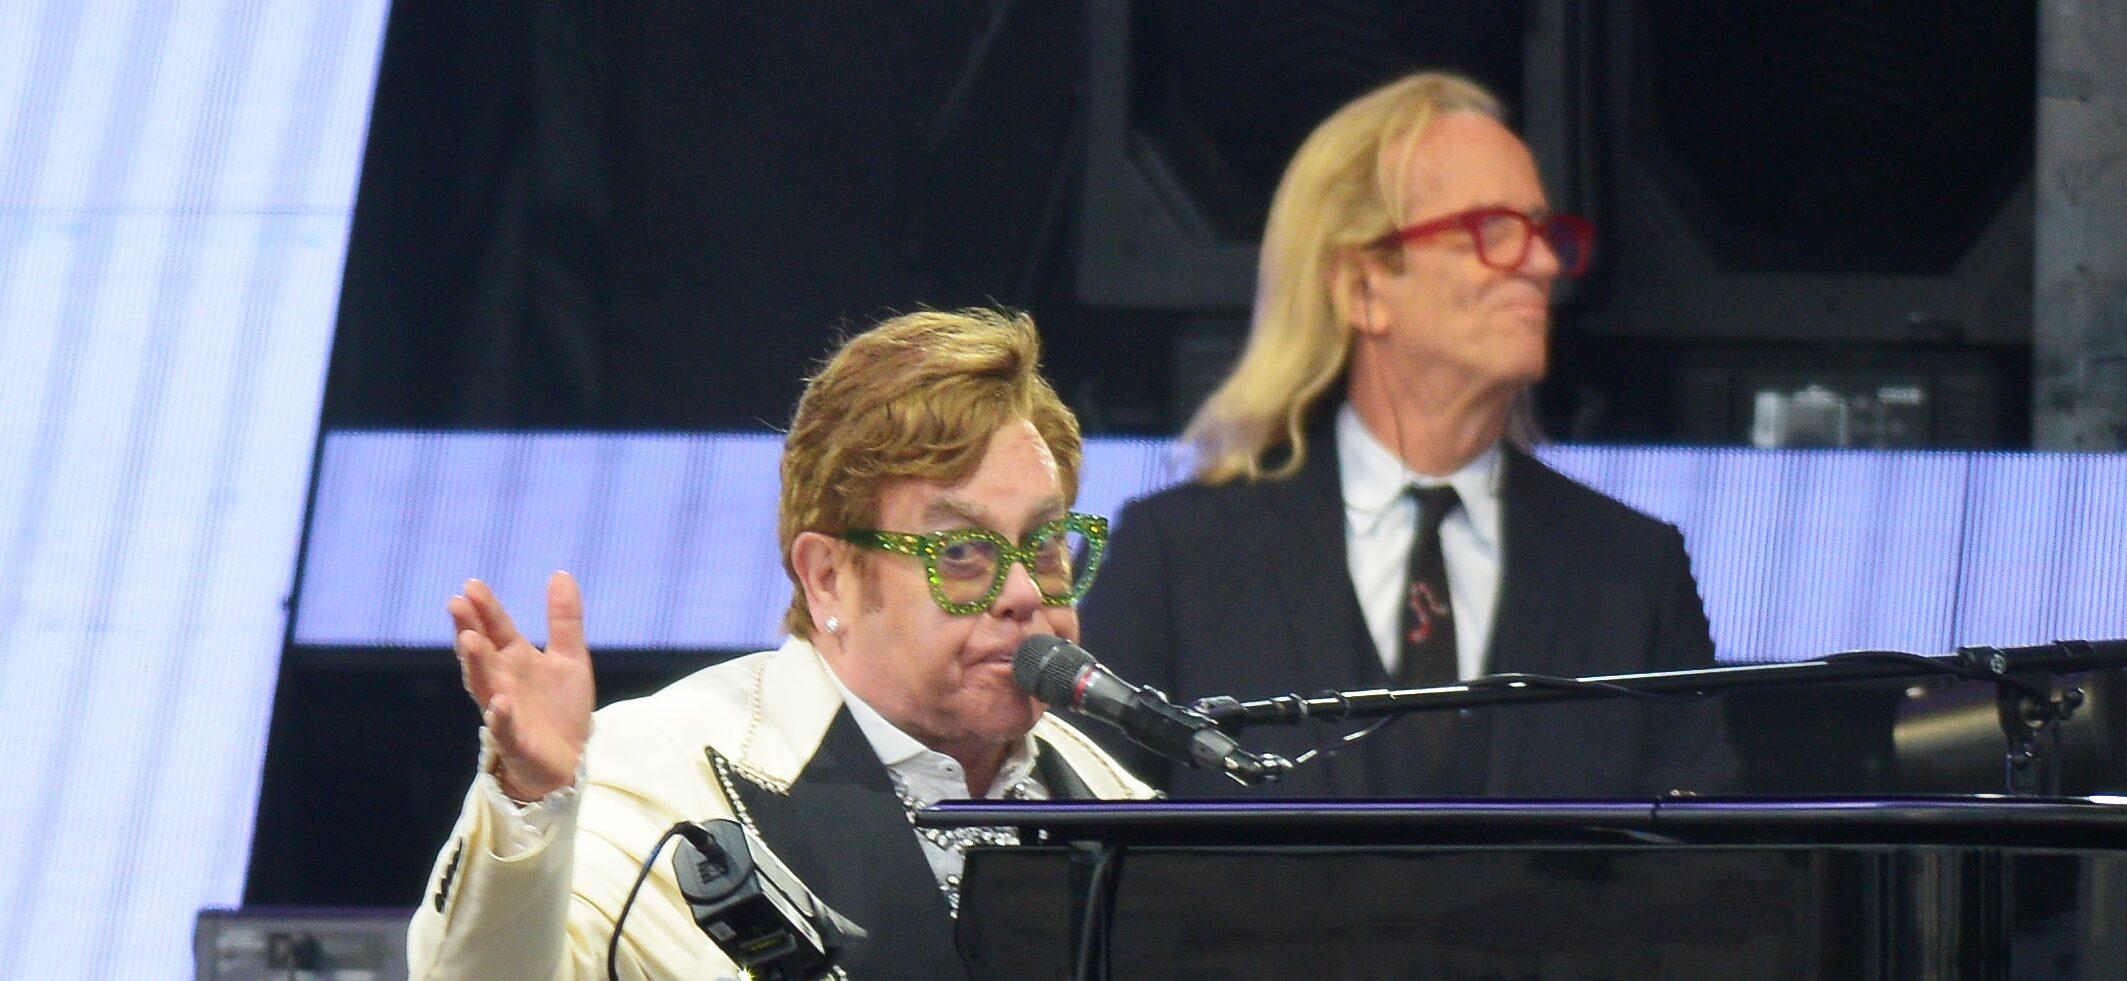 Sir Elton John headlining the BST concert in Hyde Park London England on June 24th 2022